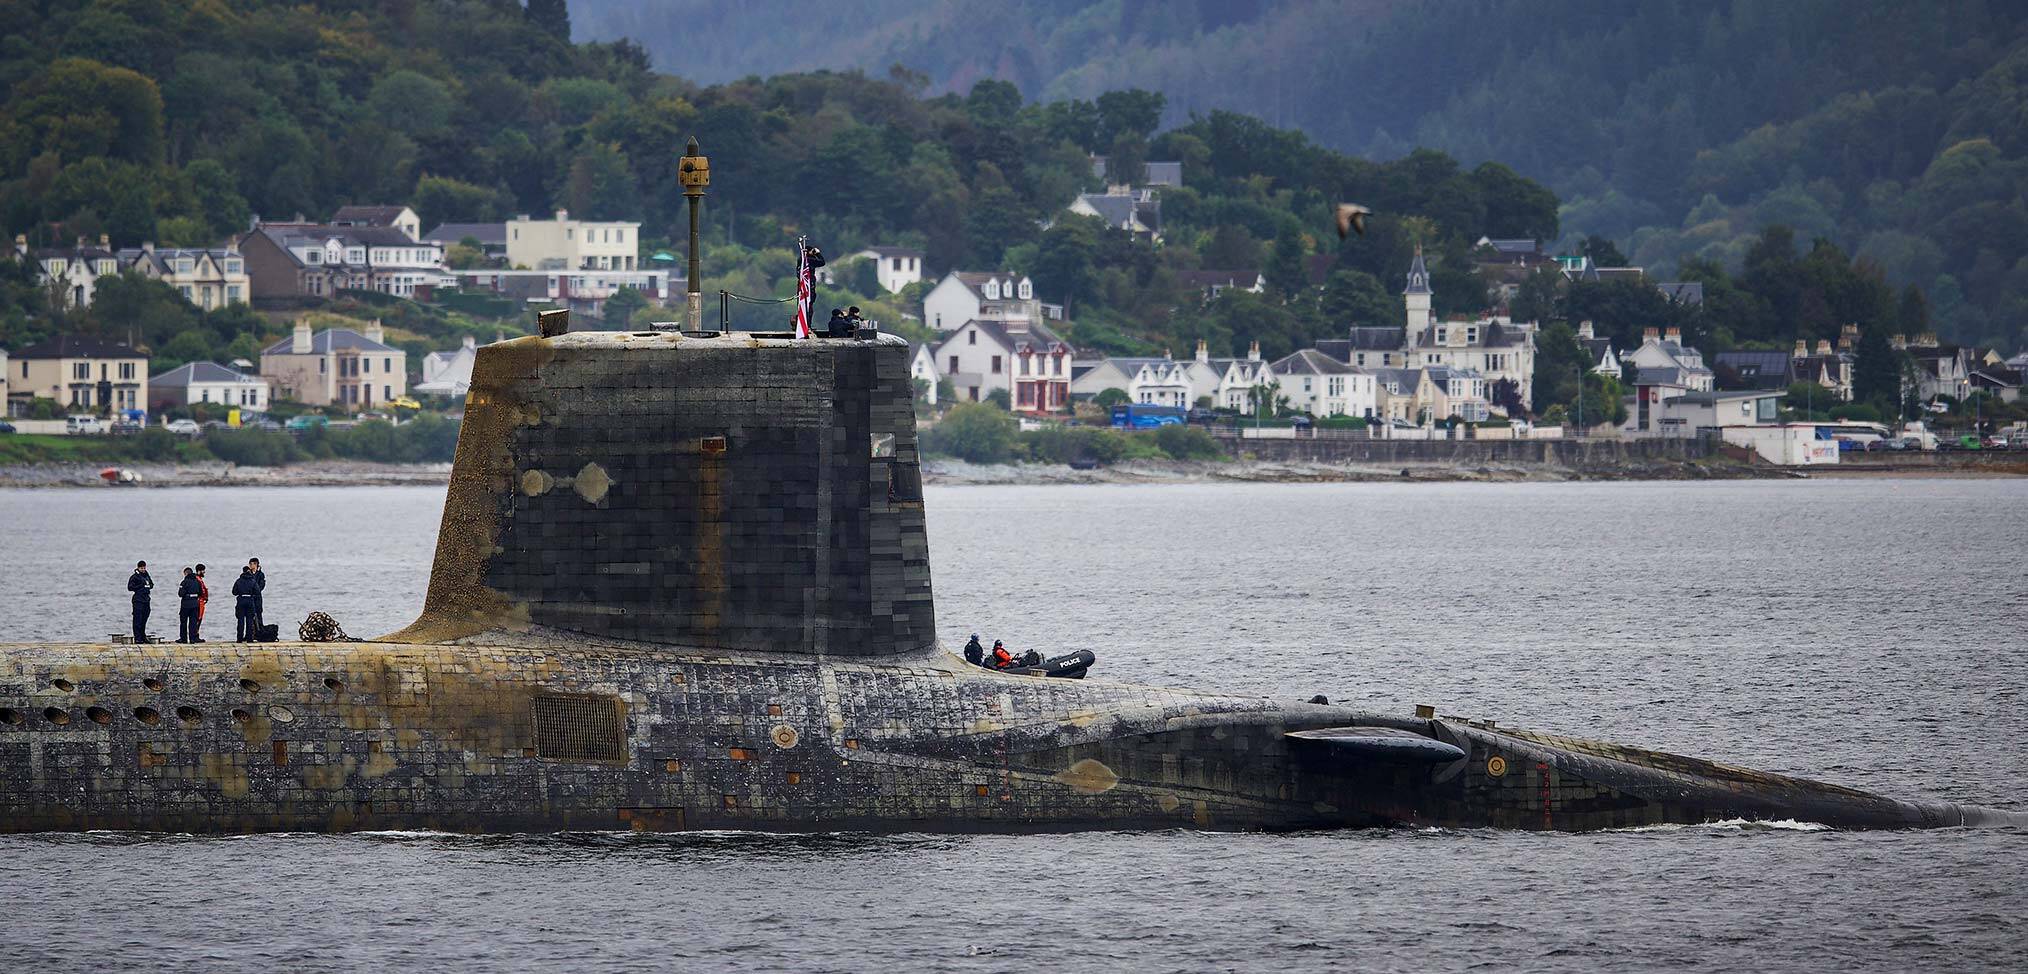 Royal Navy nuclear deterrent submarines conducting increasingly long patrols